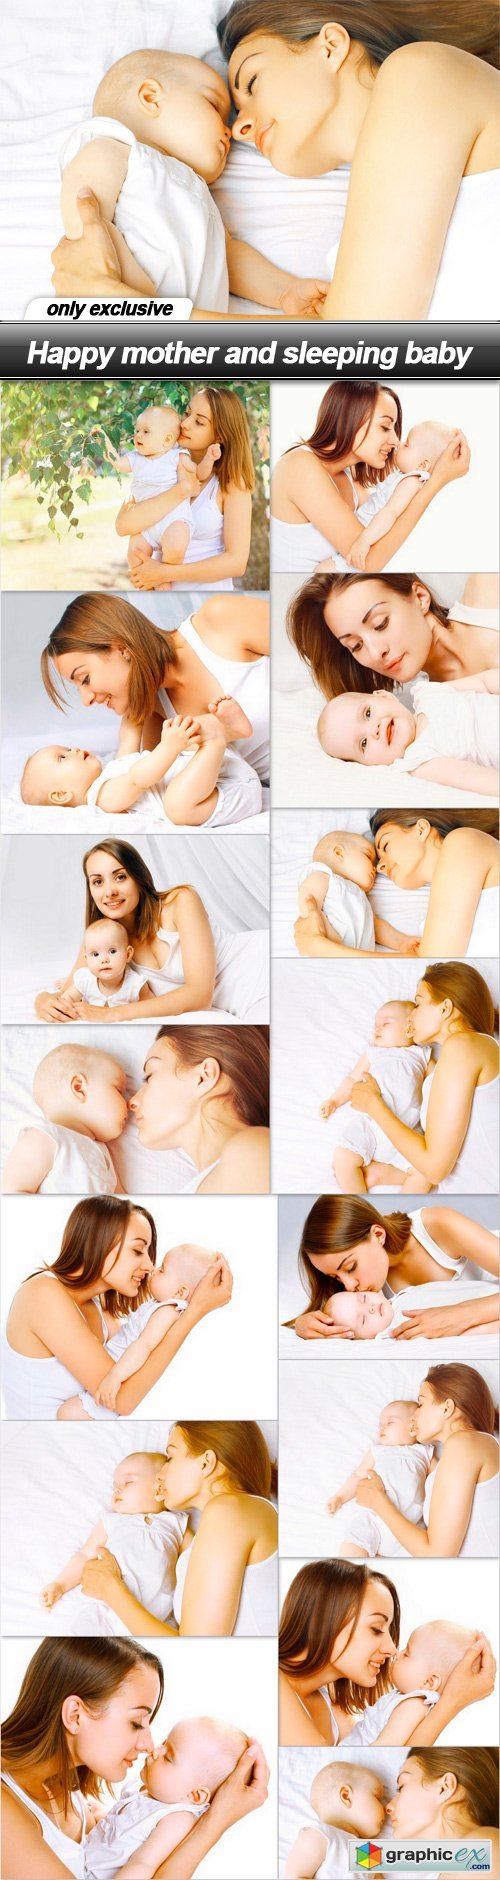 Happy mother and sleeping baby - 15 UHQ JPEG